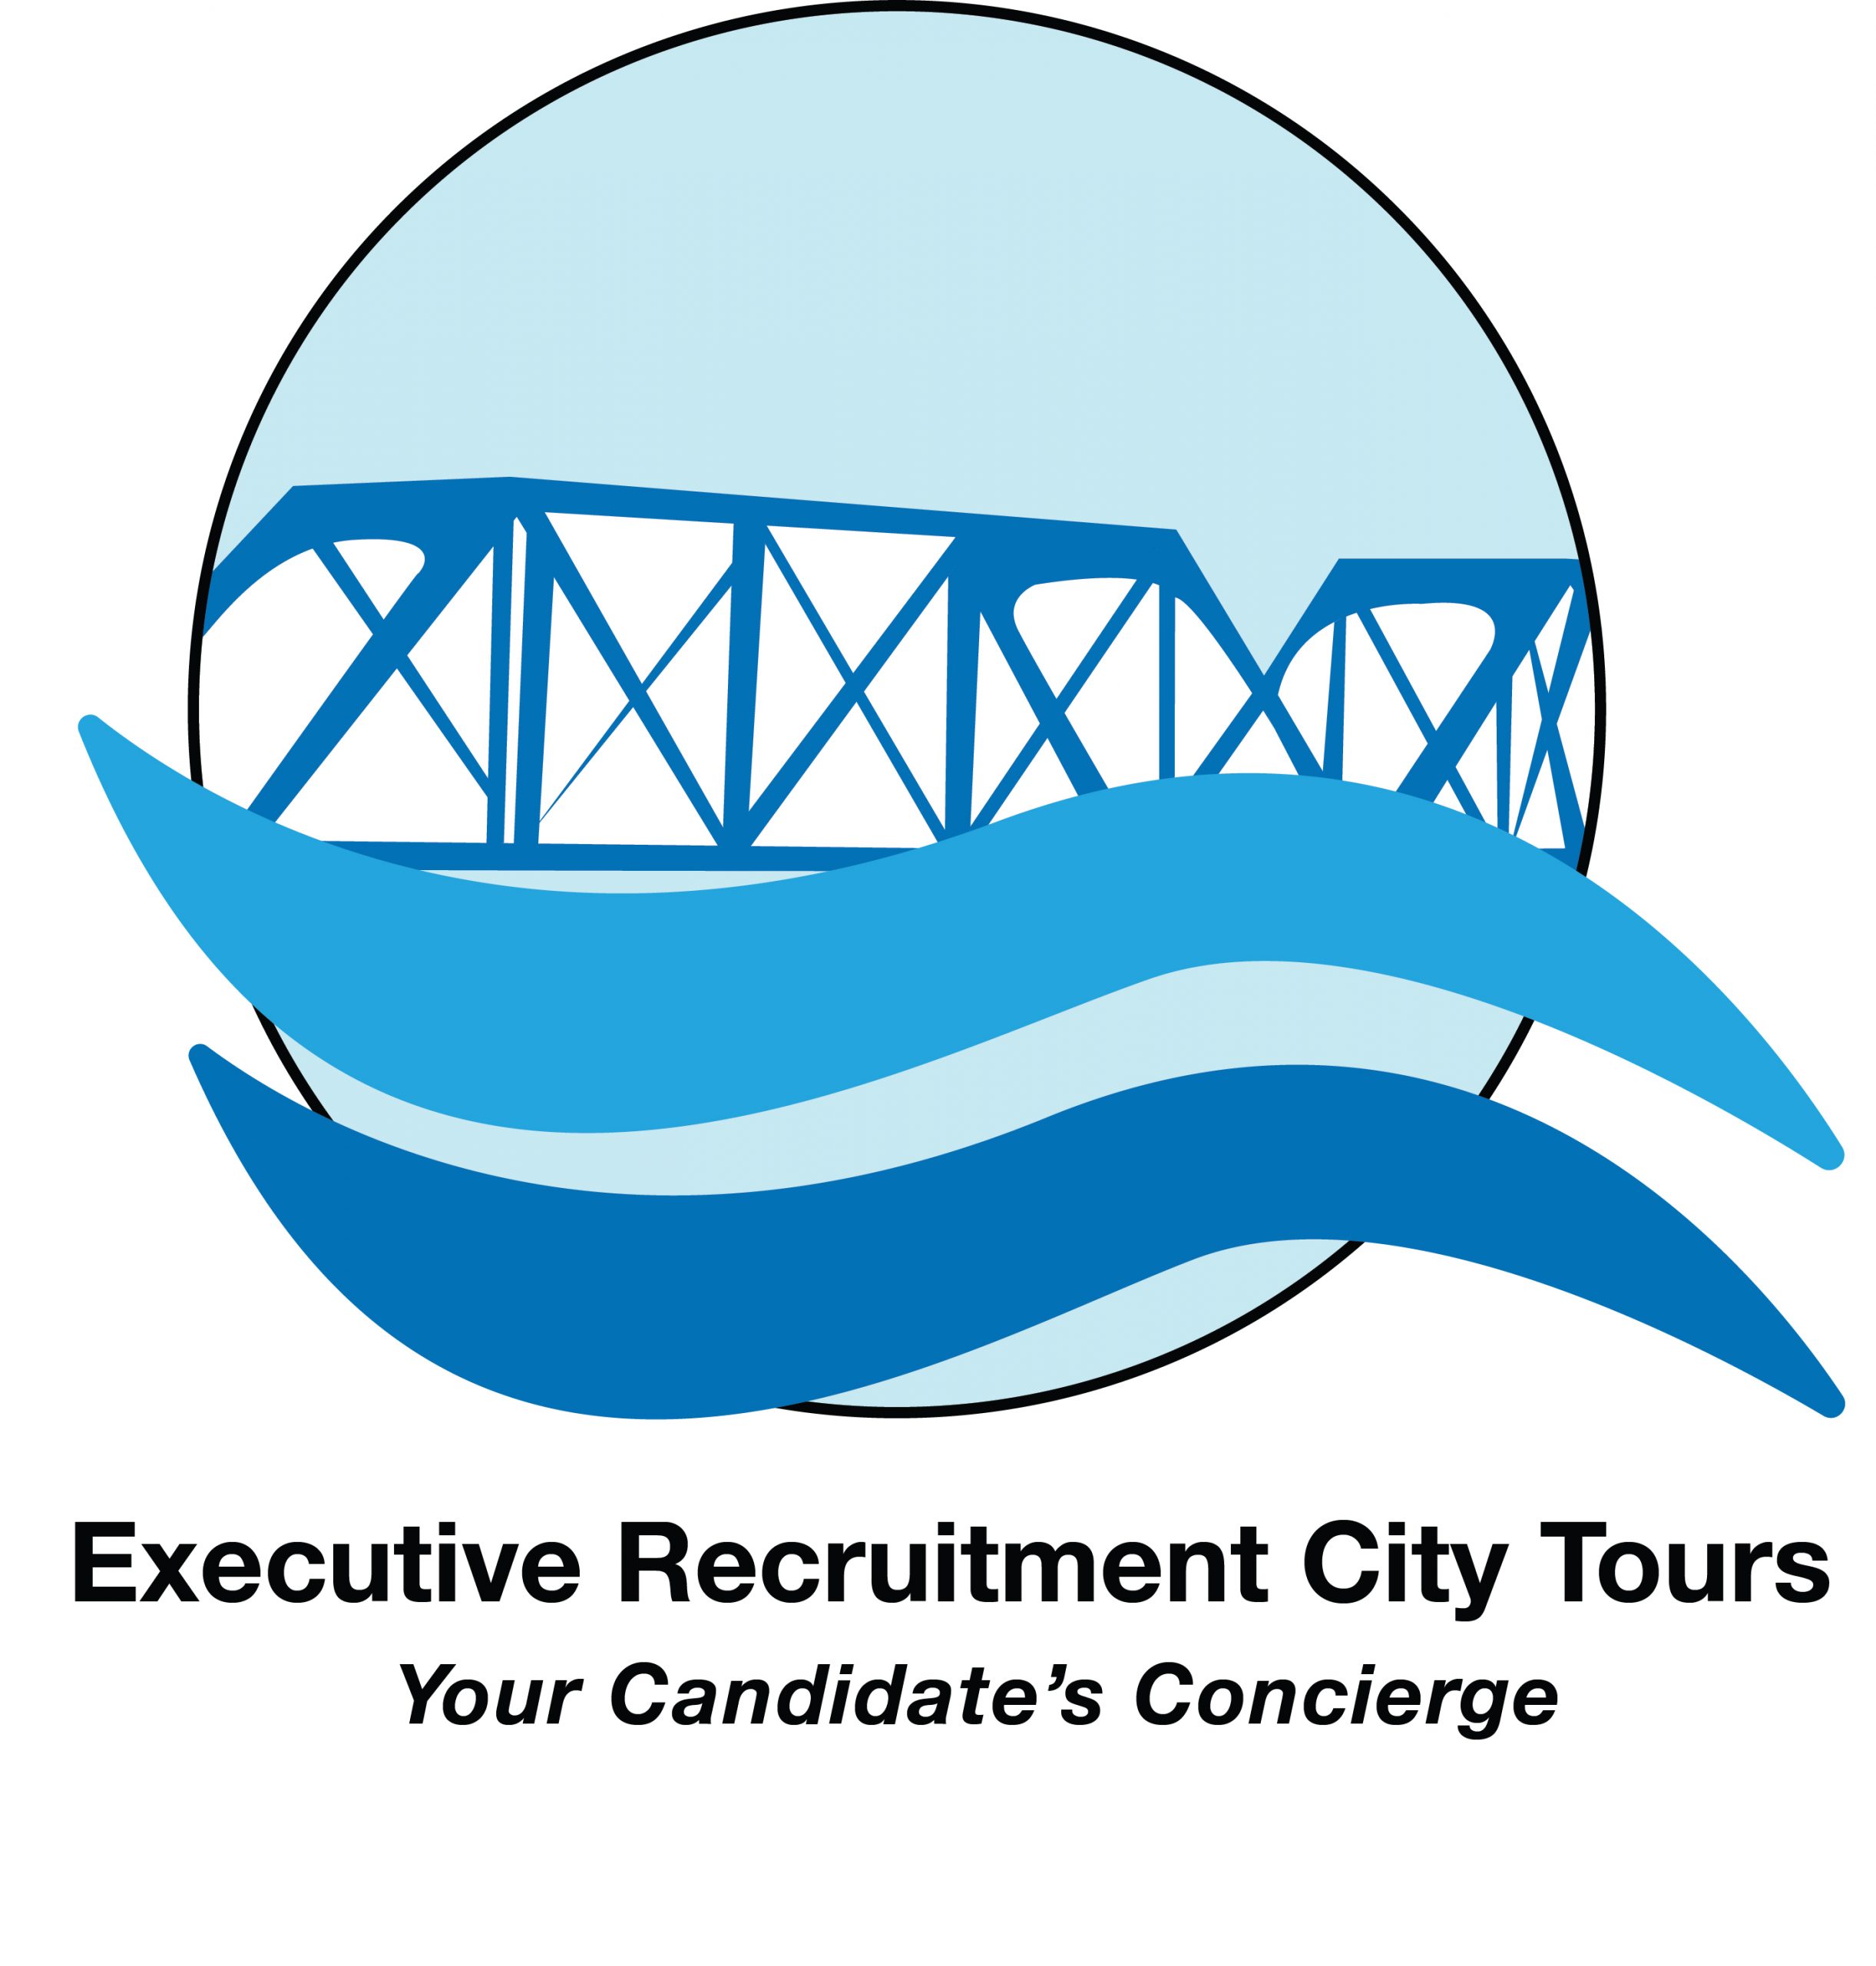 Executive Recruitment City Tours